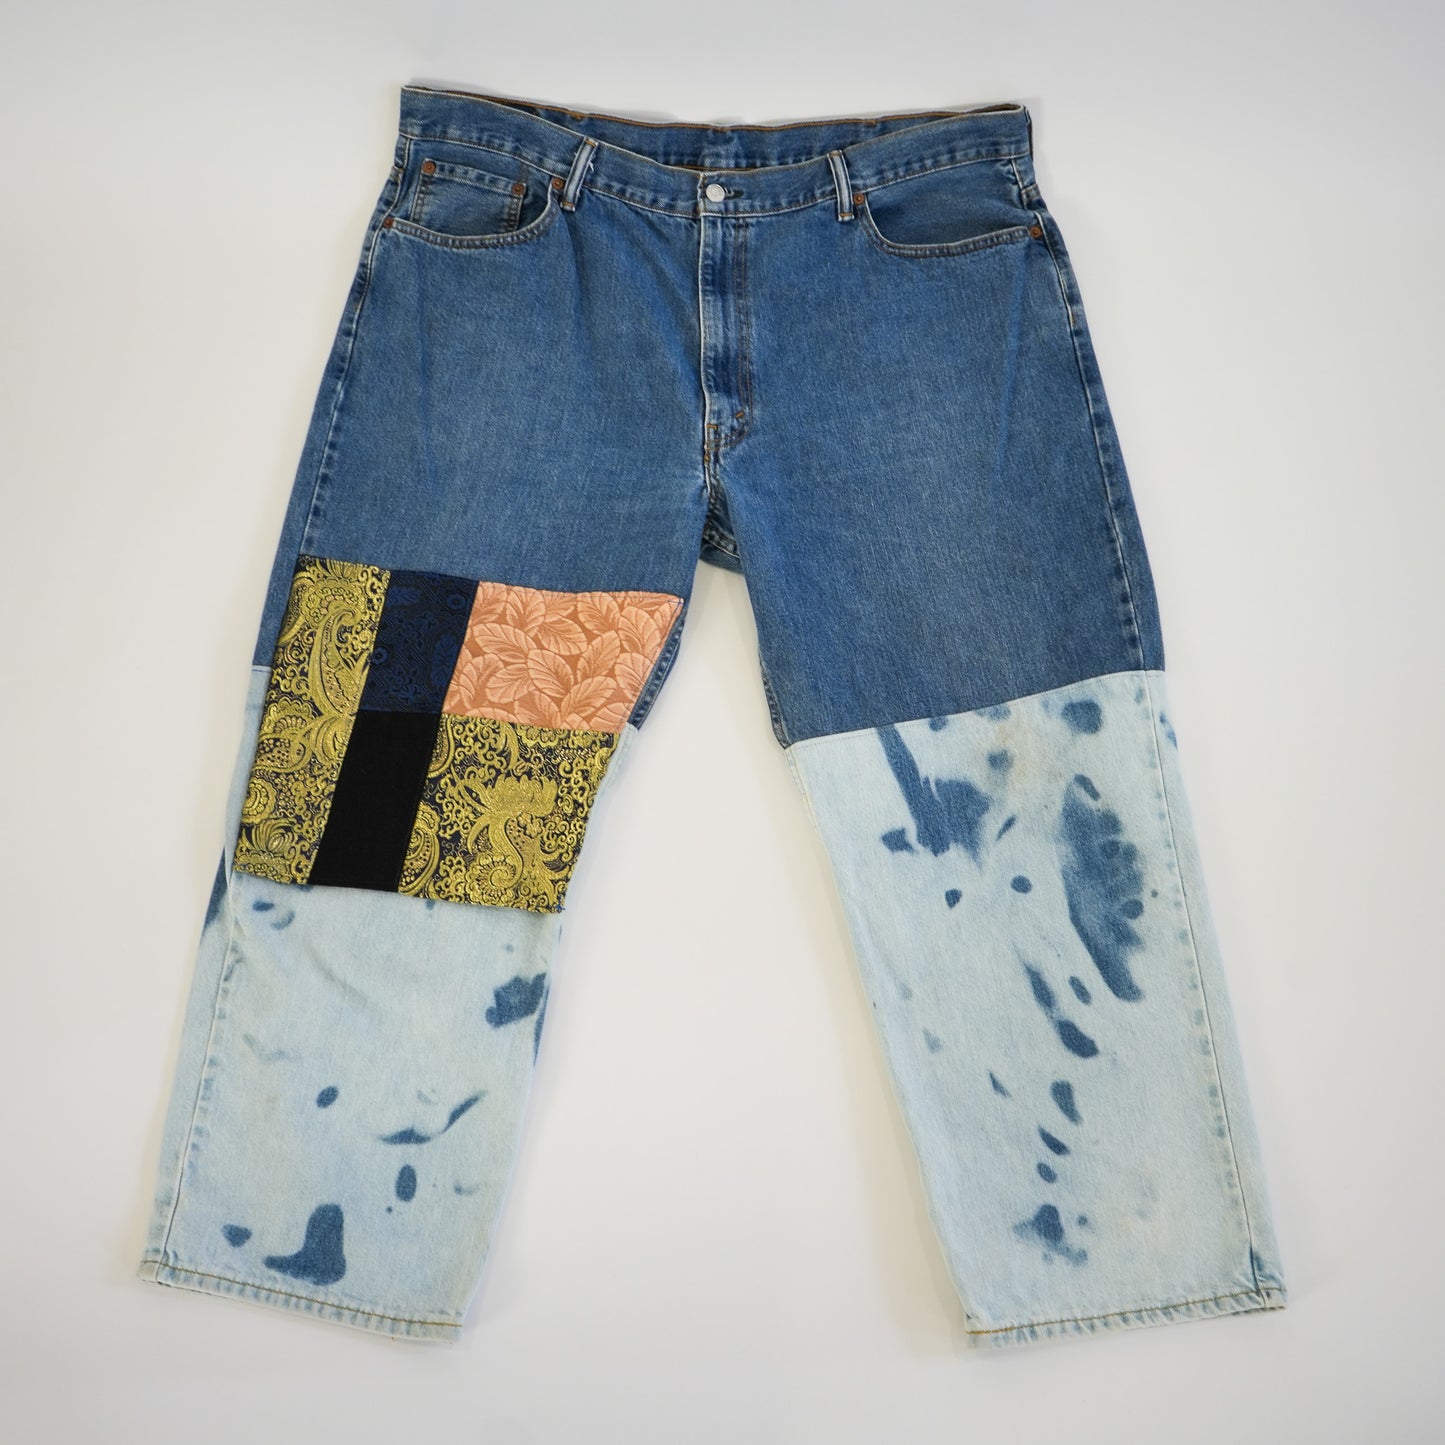 Brocade & Denim Patchwork Tie-Dyed Jeans (W 44)